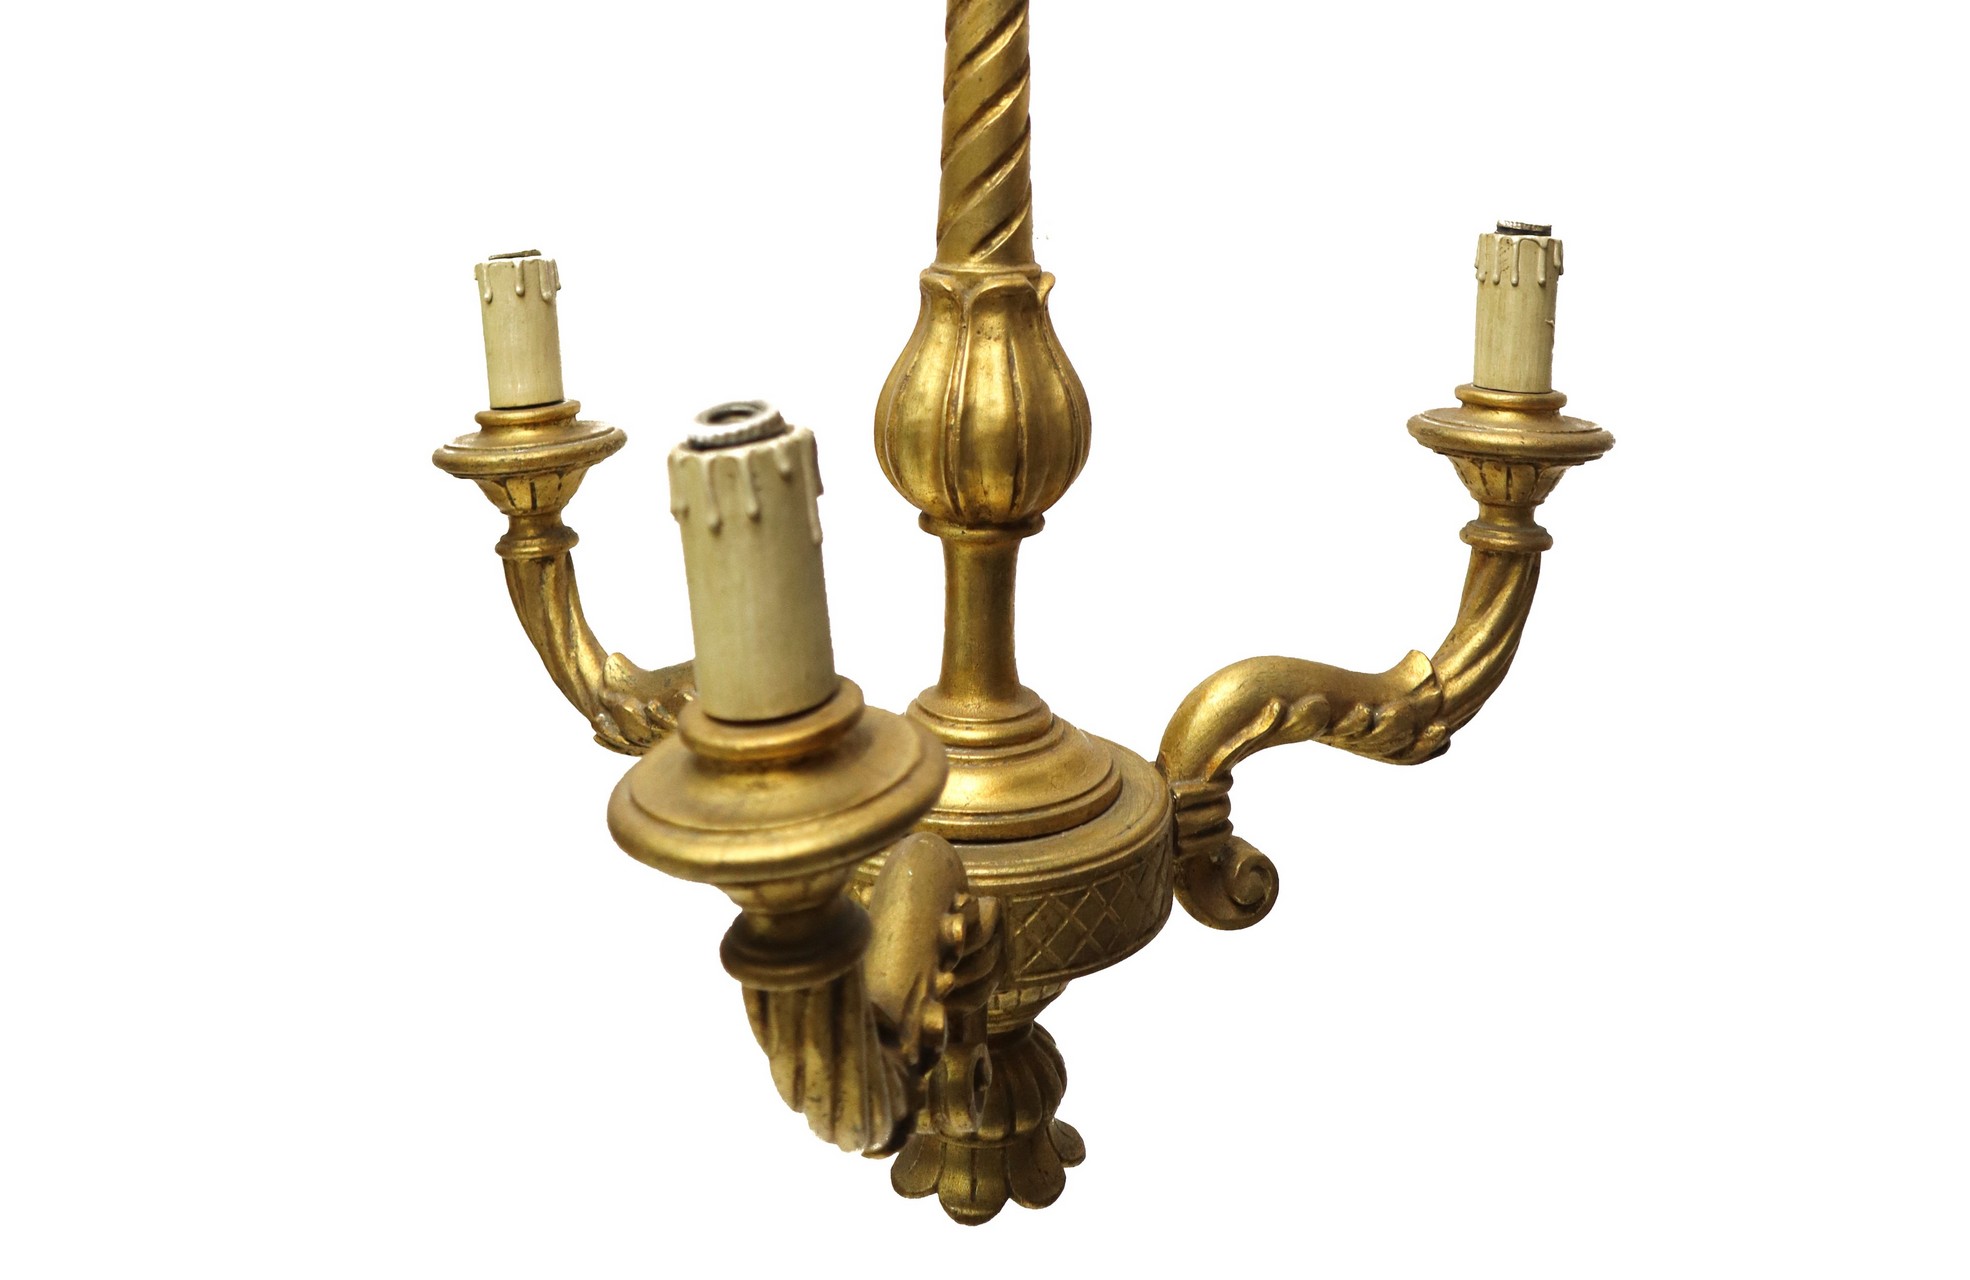 3-light chandelier in golden wood, 20th century - Image 3 of 4